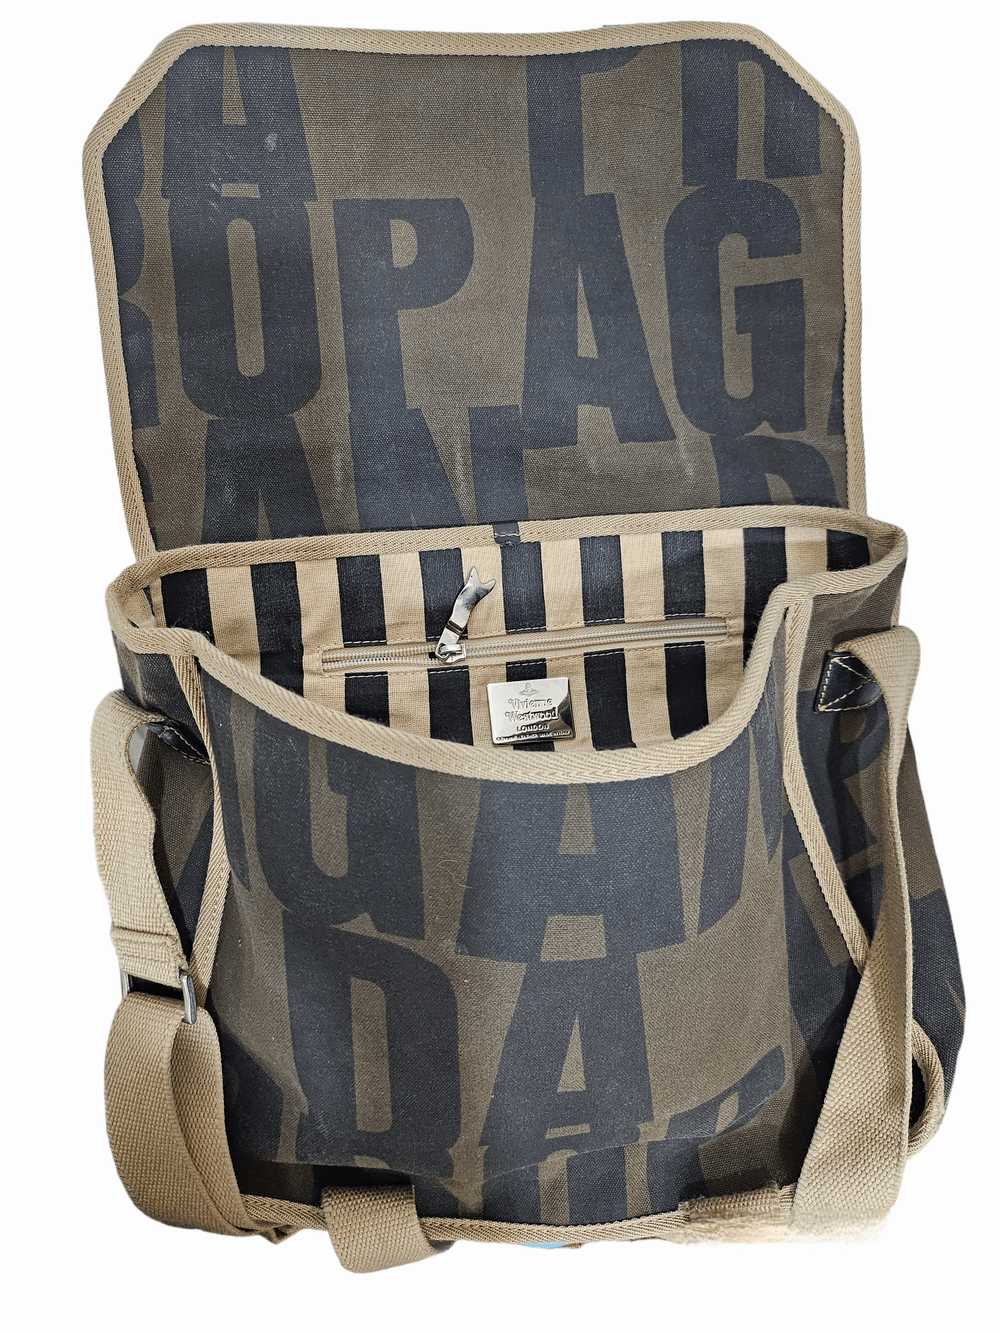 Vivienne Westwood Propaganda Canvas Messenger Bag - image 5